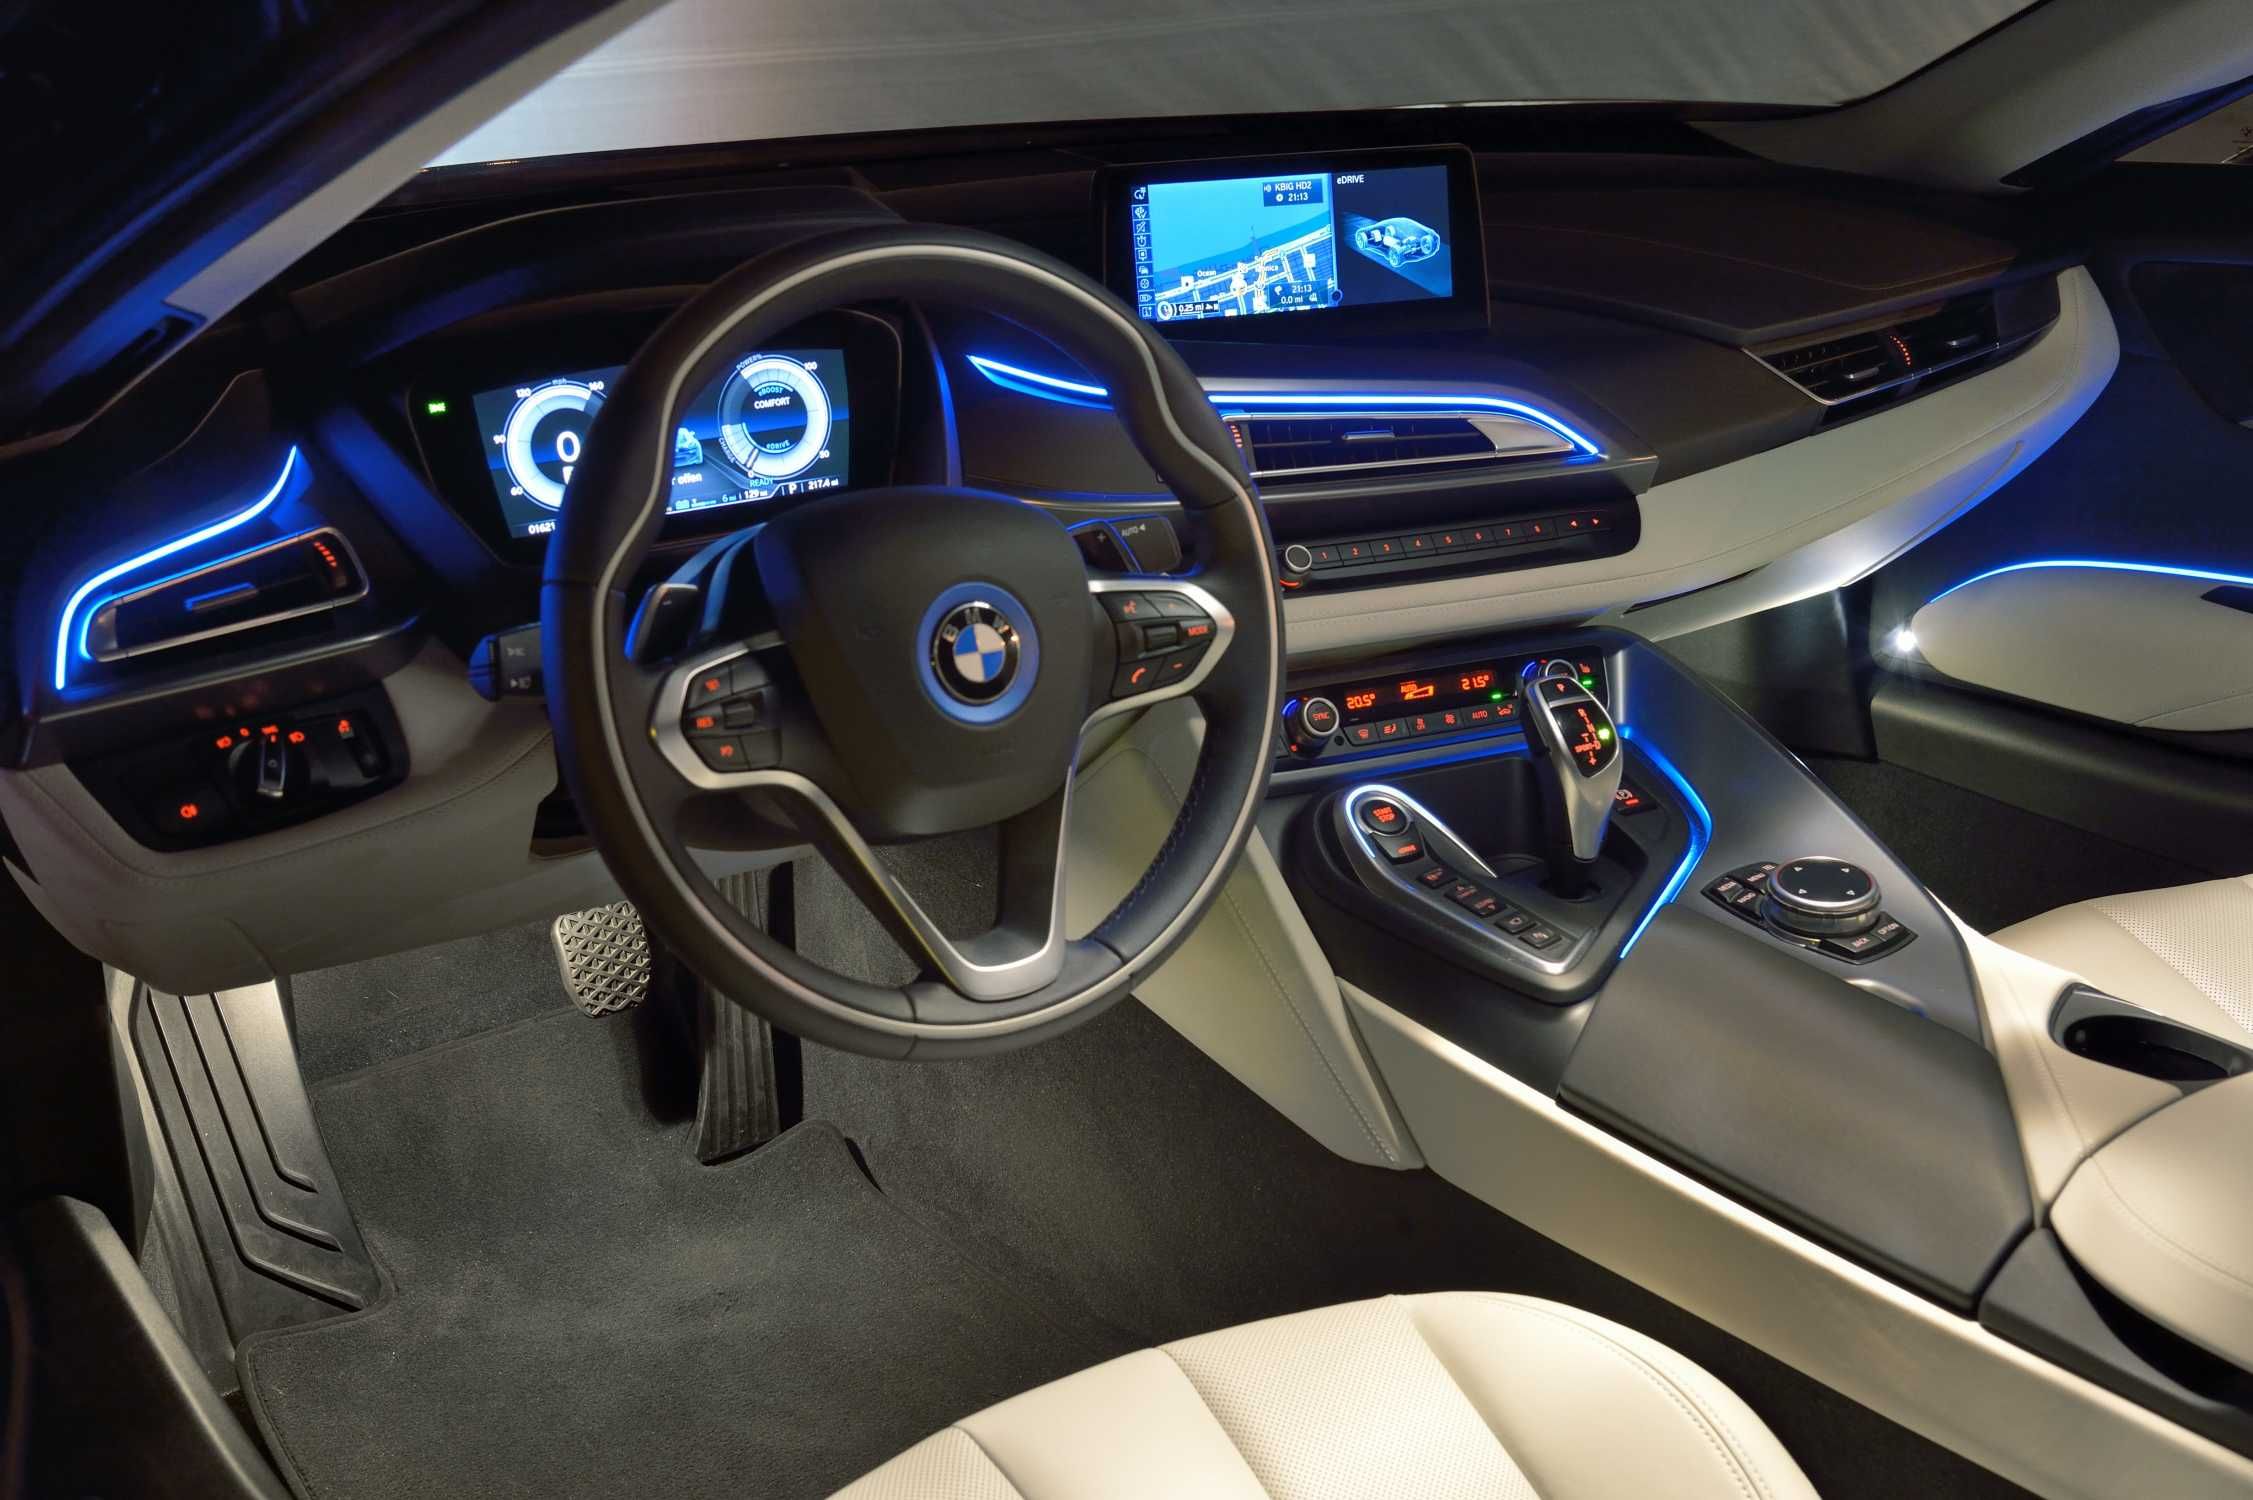 BMW I8 interior at night